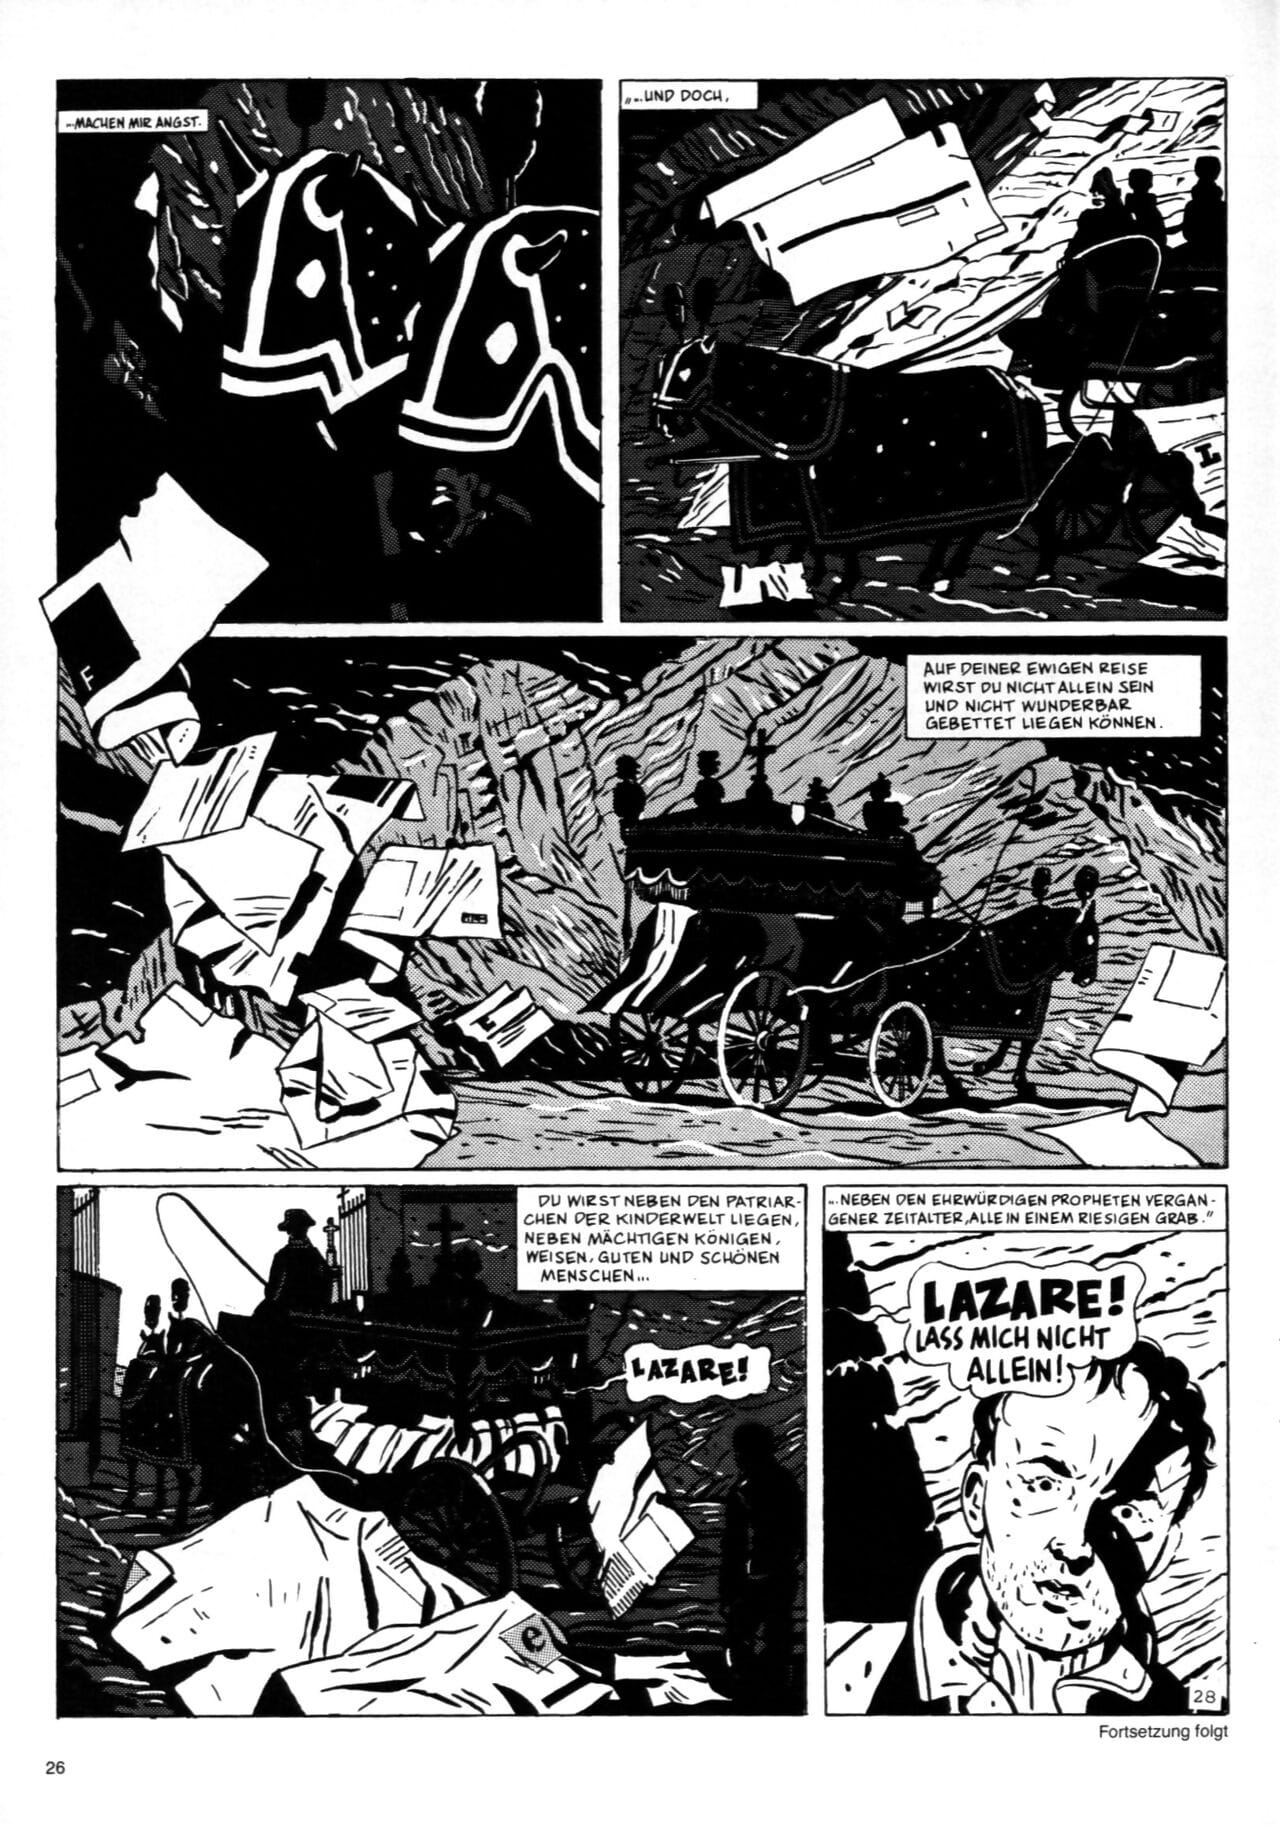 schwermetall #095 جزء 2 page 1